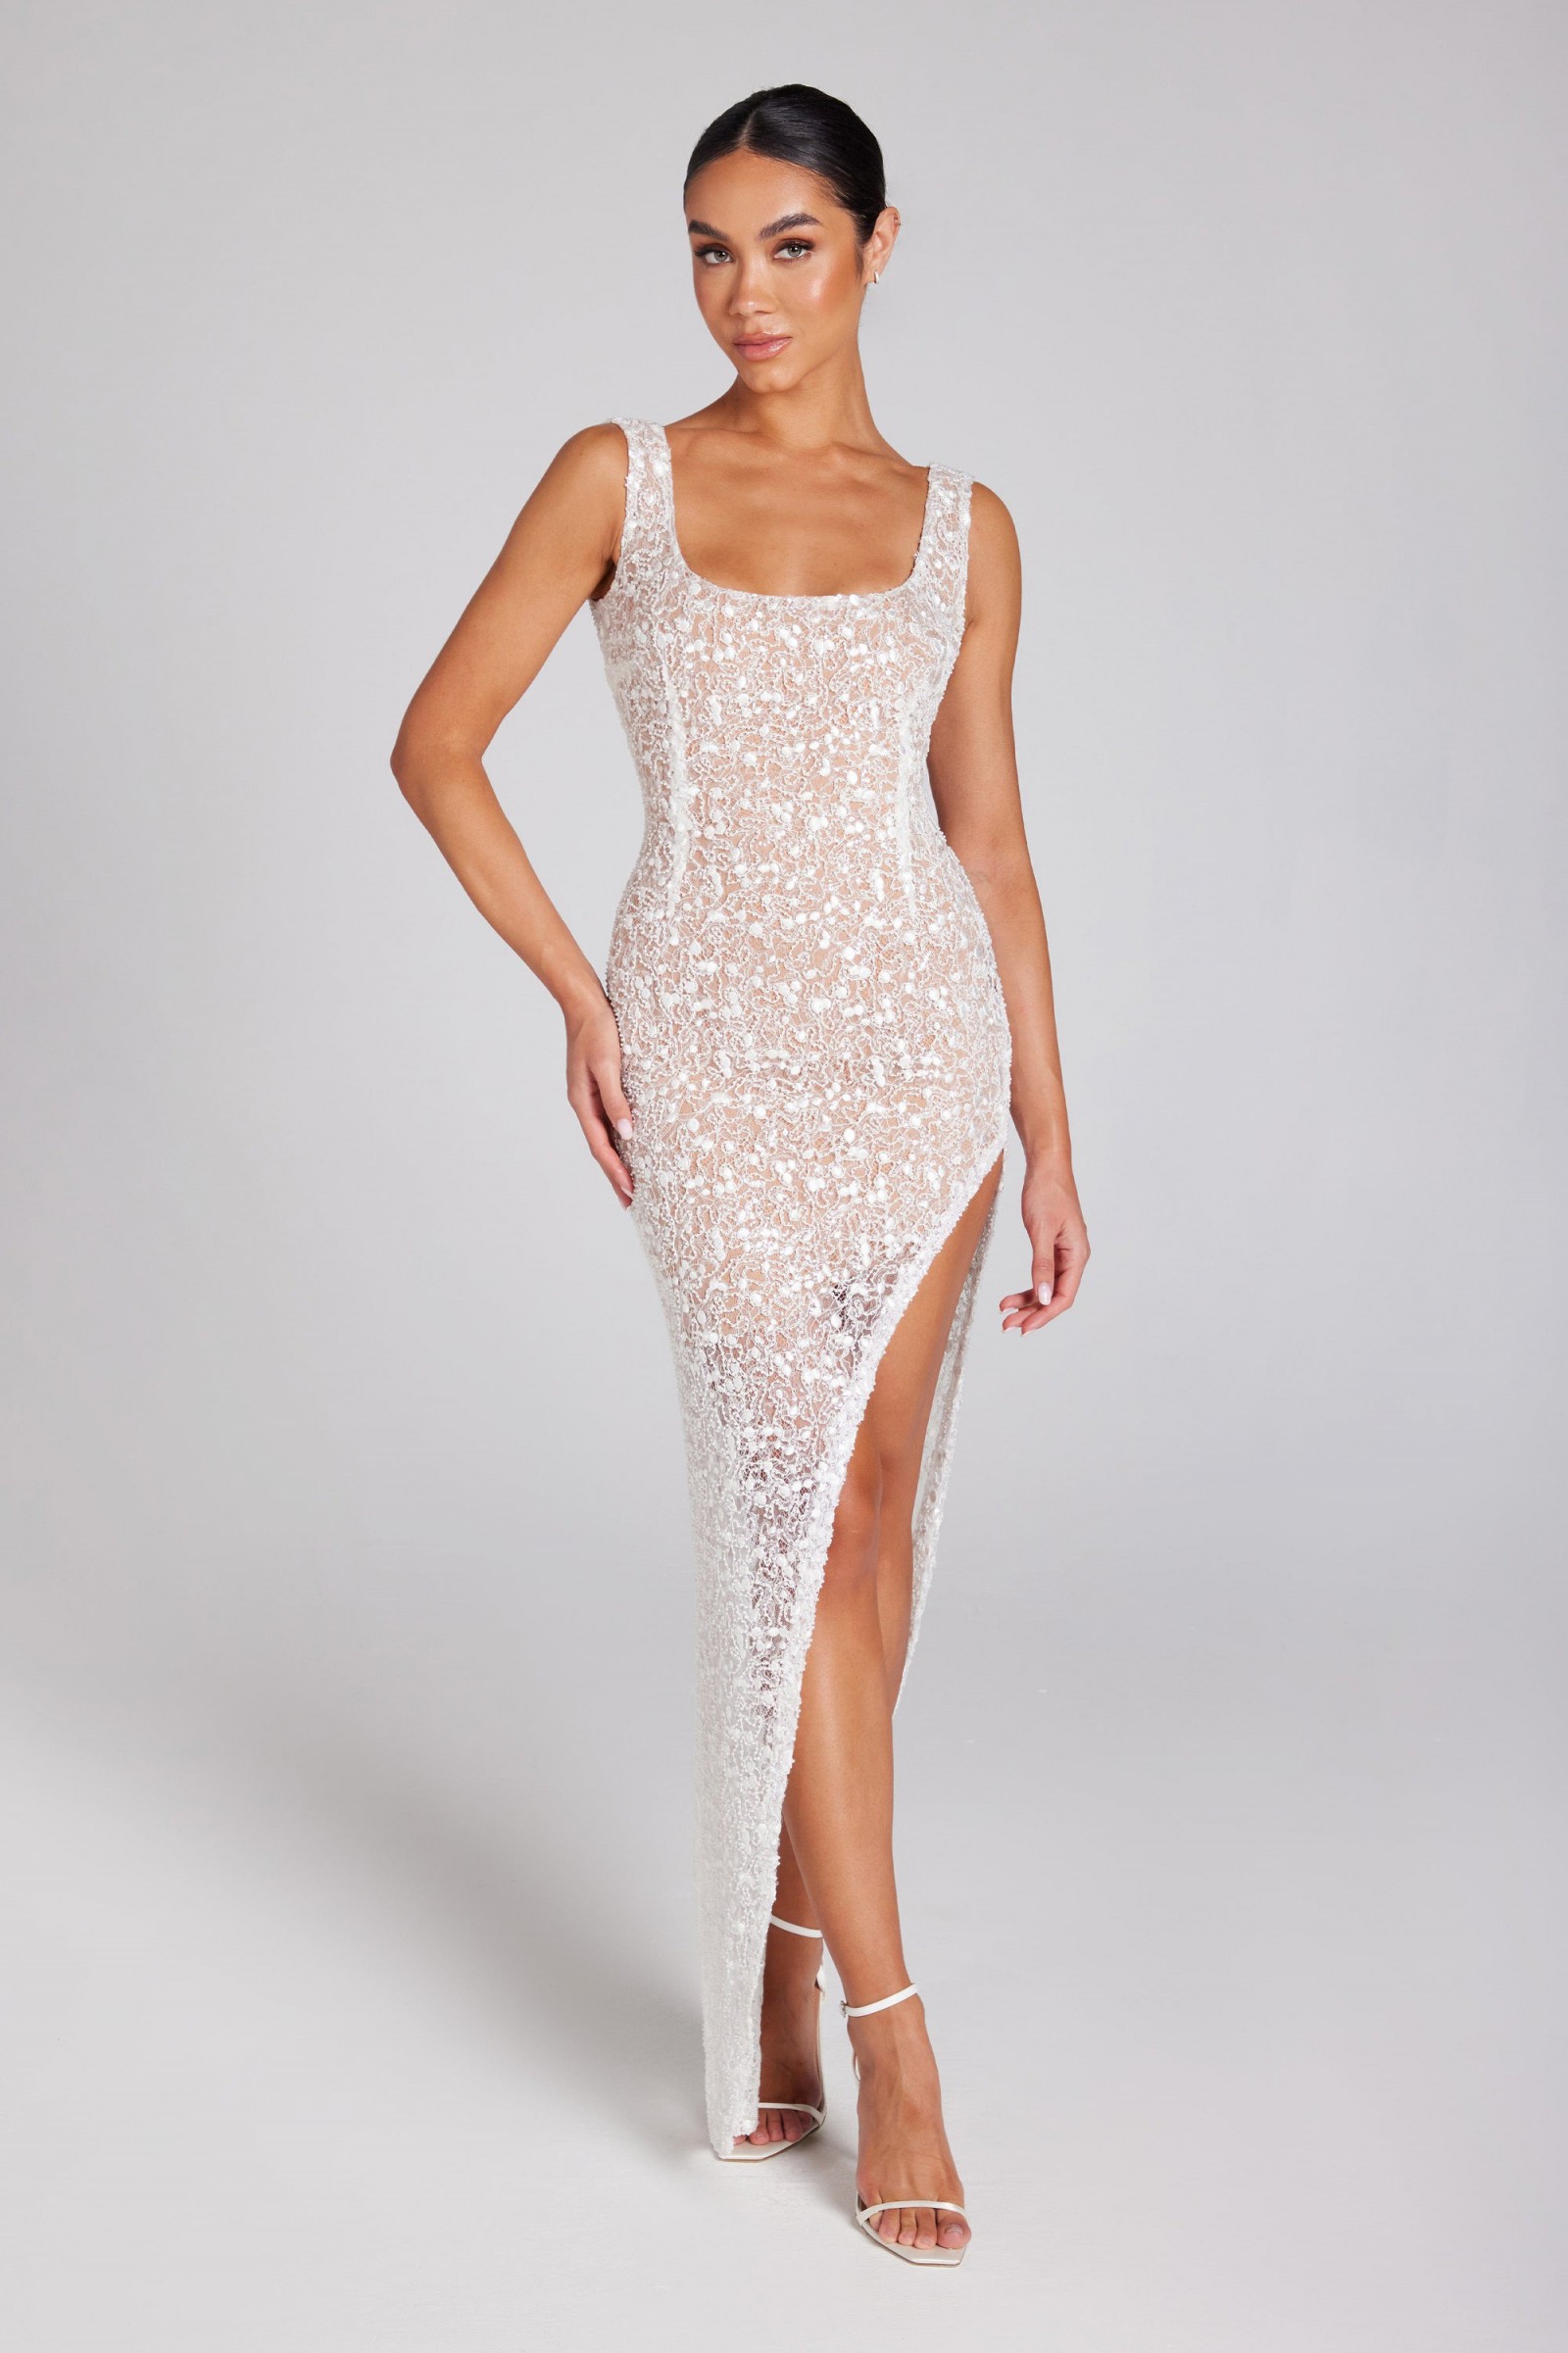 Nadine Merabi LOUISA WHITE DRESS Wedding Dress Save 55% - Stillwhite